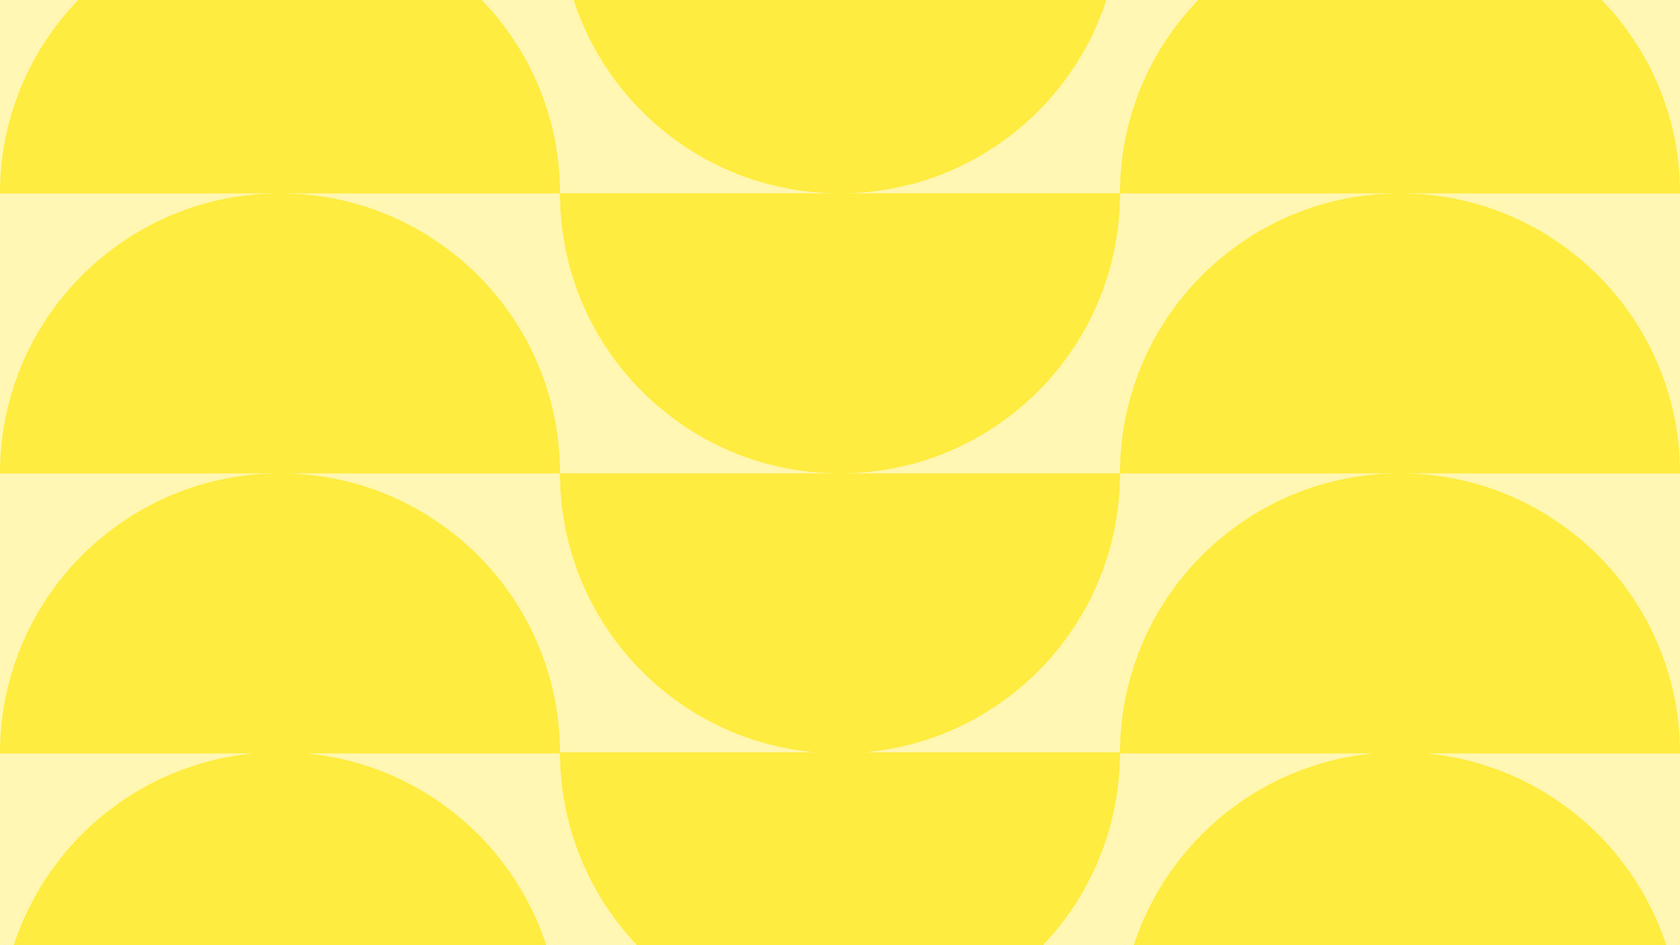 Yellow patterns and shapes, including circles, semi-circles, and decagons.